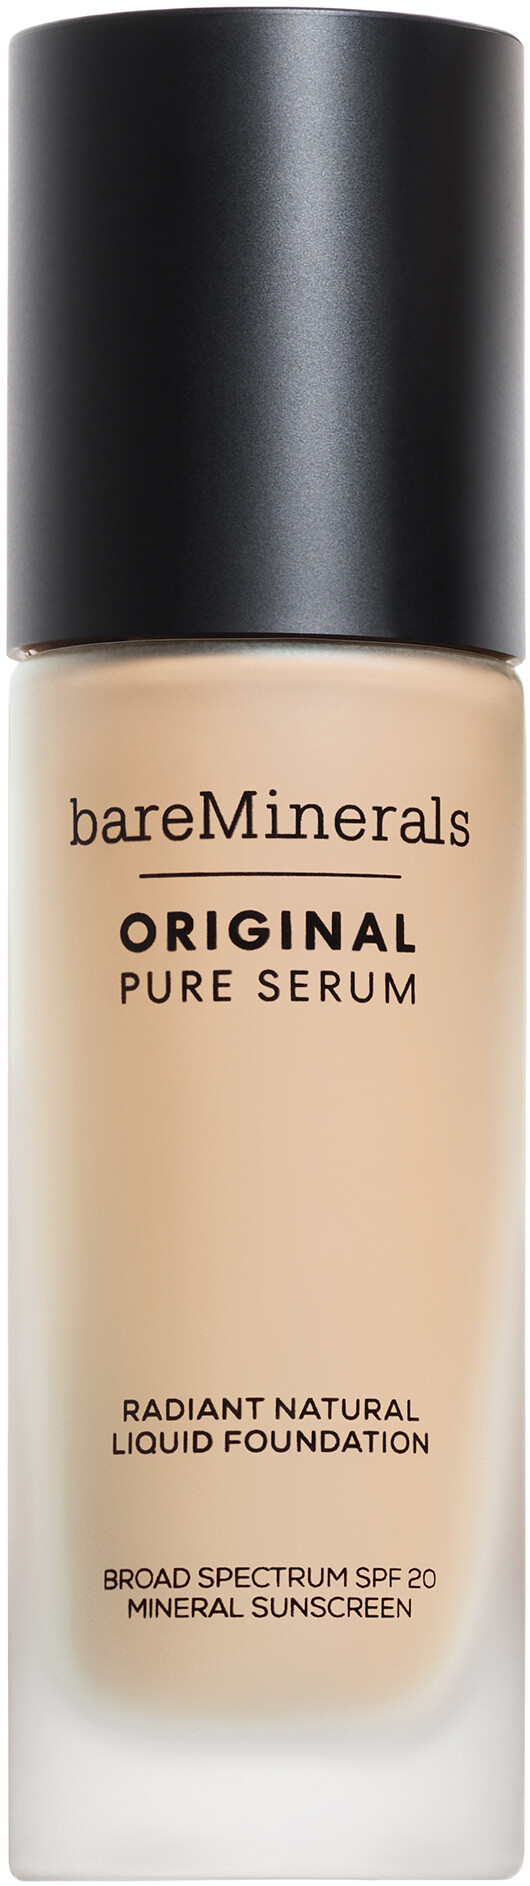 bareMinerals Original Pure Serum Radiant Natural Liquid Foundation SPF20 30ml 1.5 - Fair Neutral